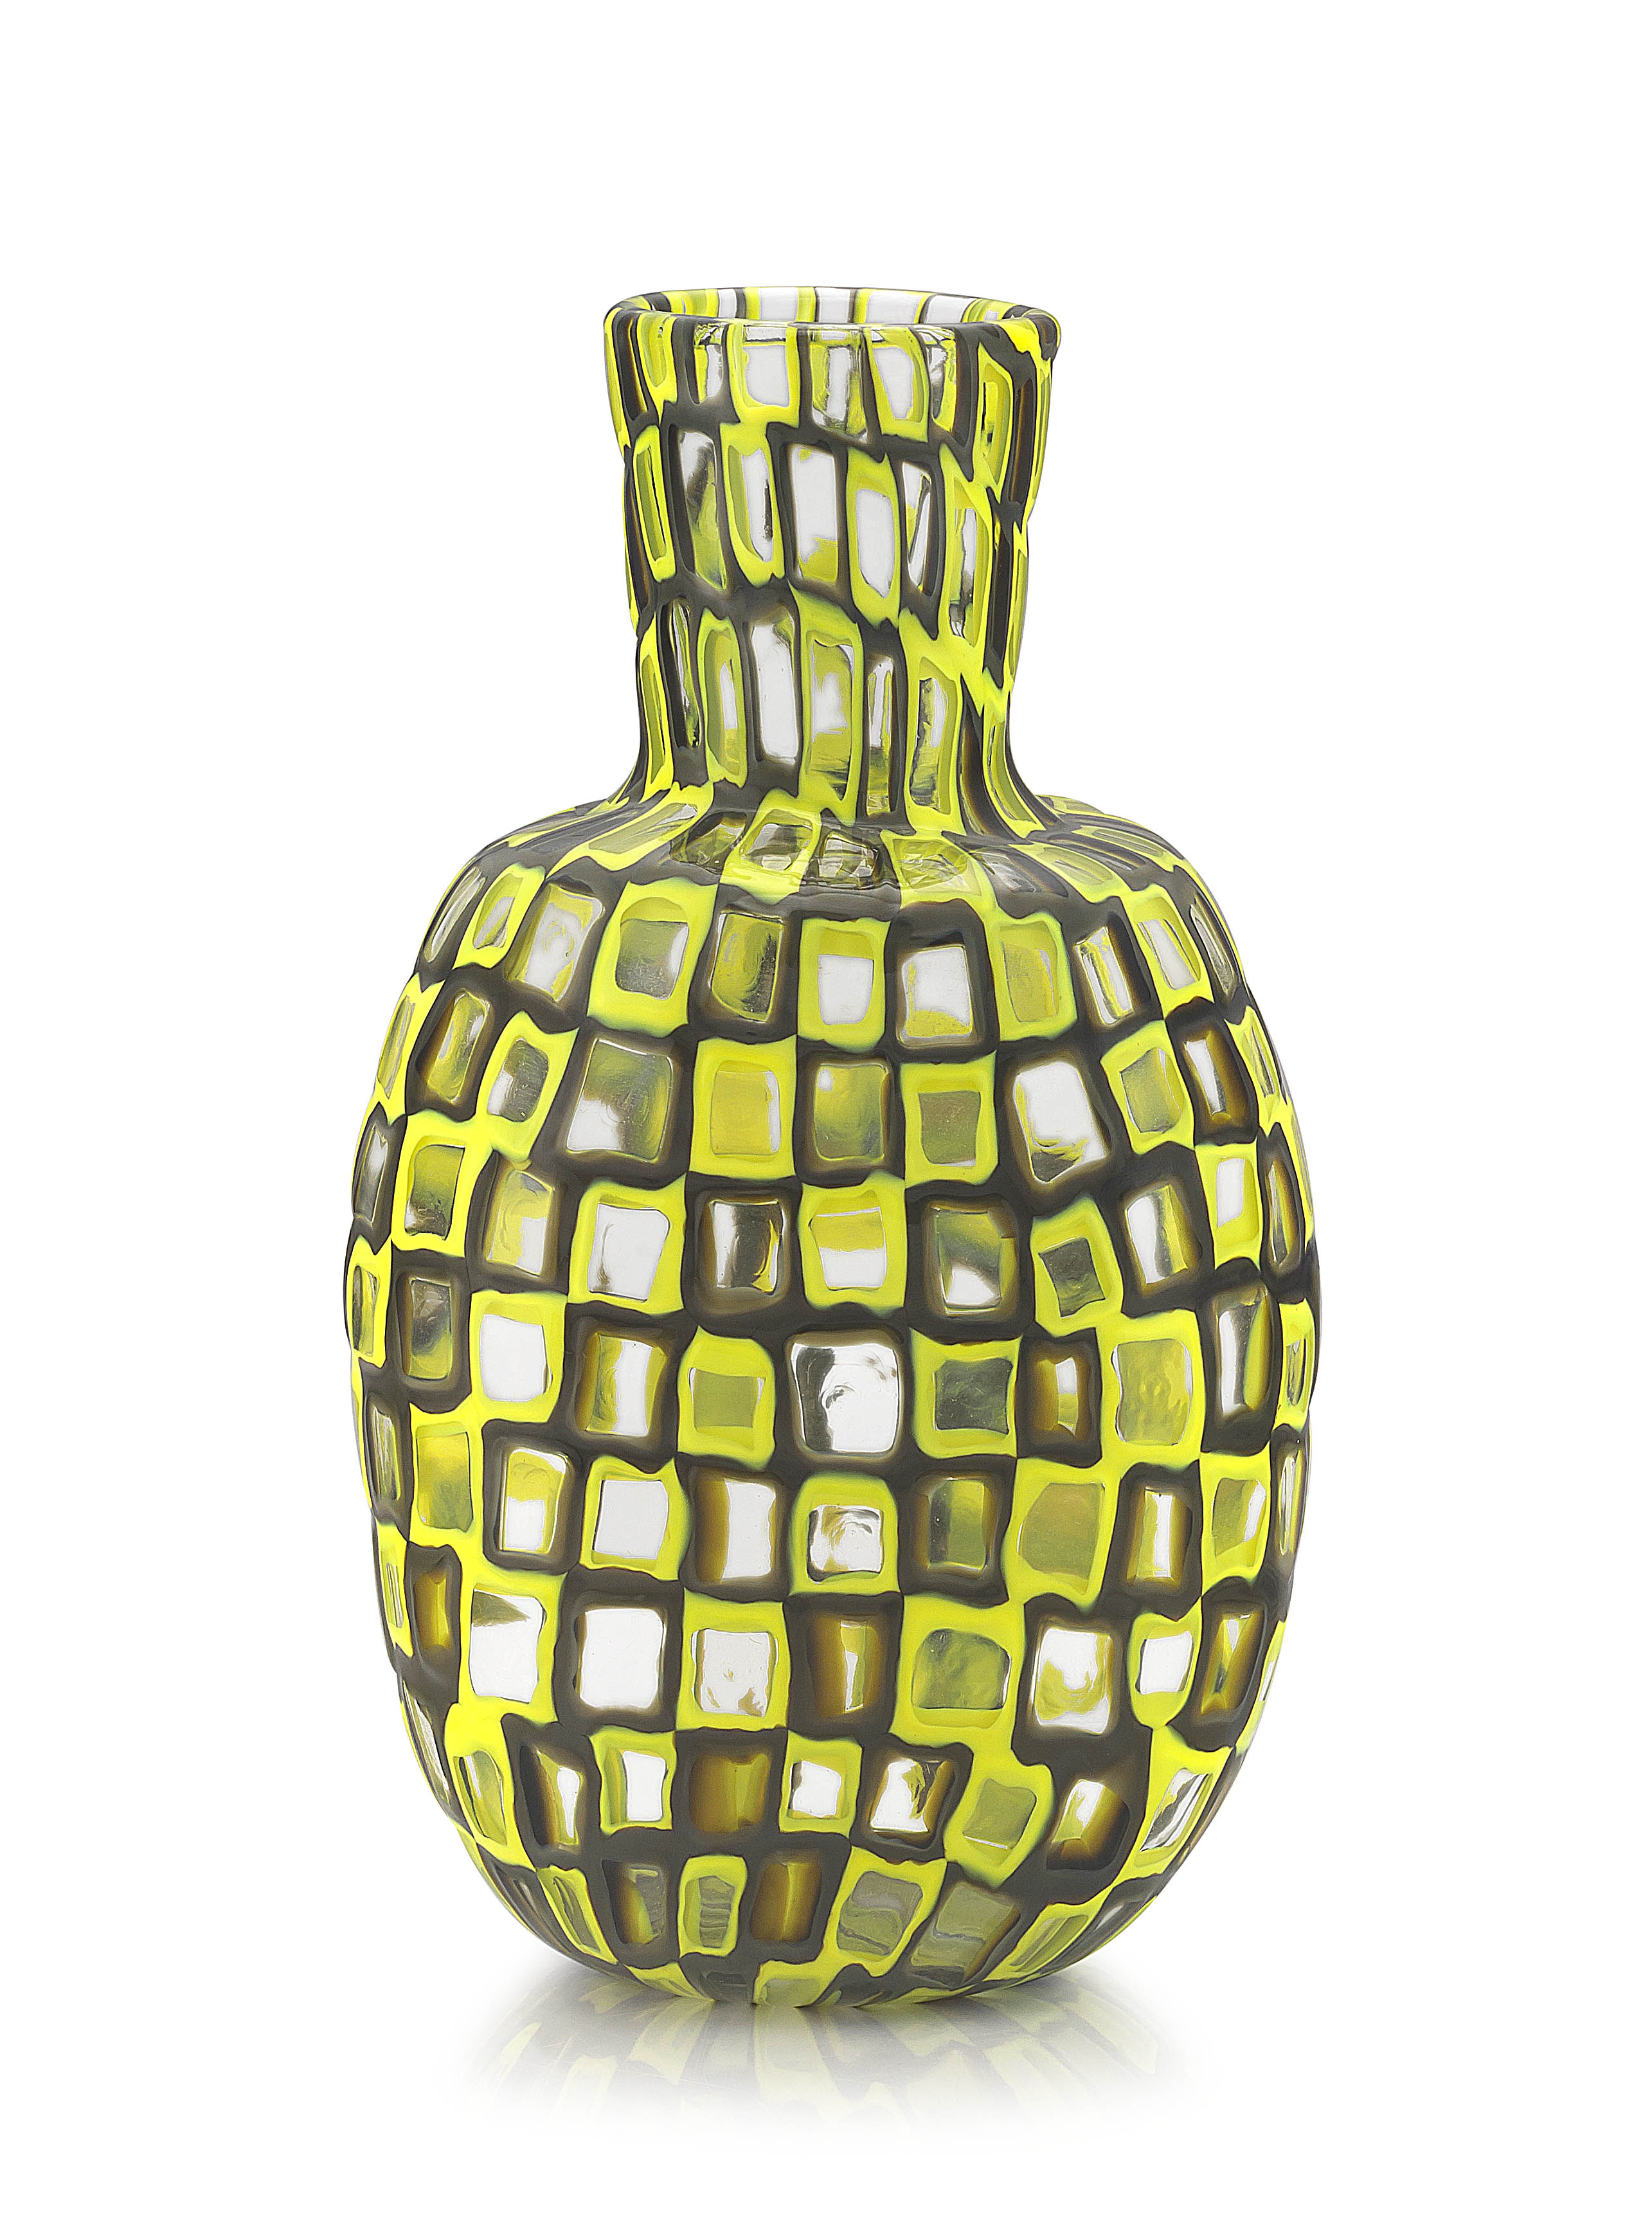 A Tobia Scarpa yellow and grey glass fused murrine vase for Venini, Occhi series, 1960s